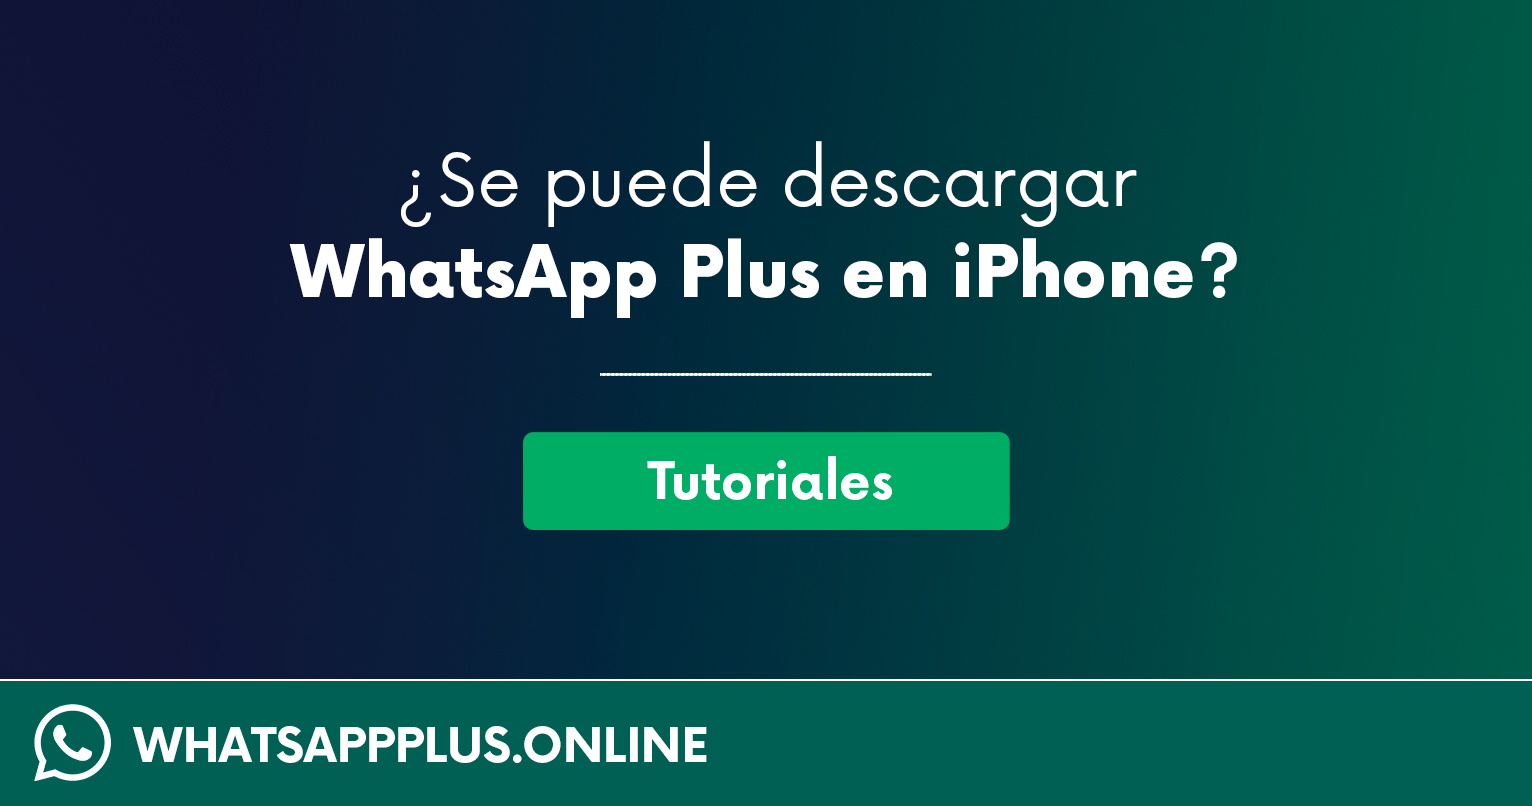 whatsapp plus en iphone